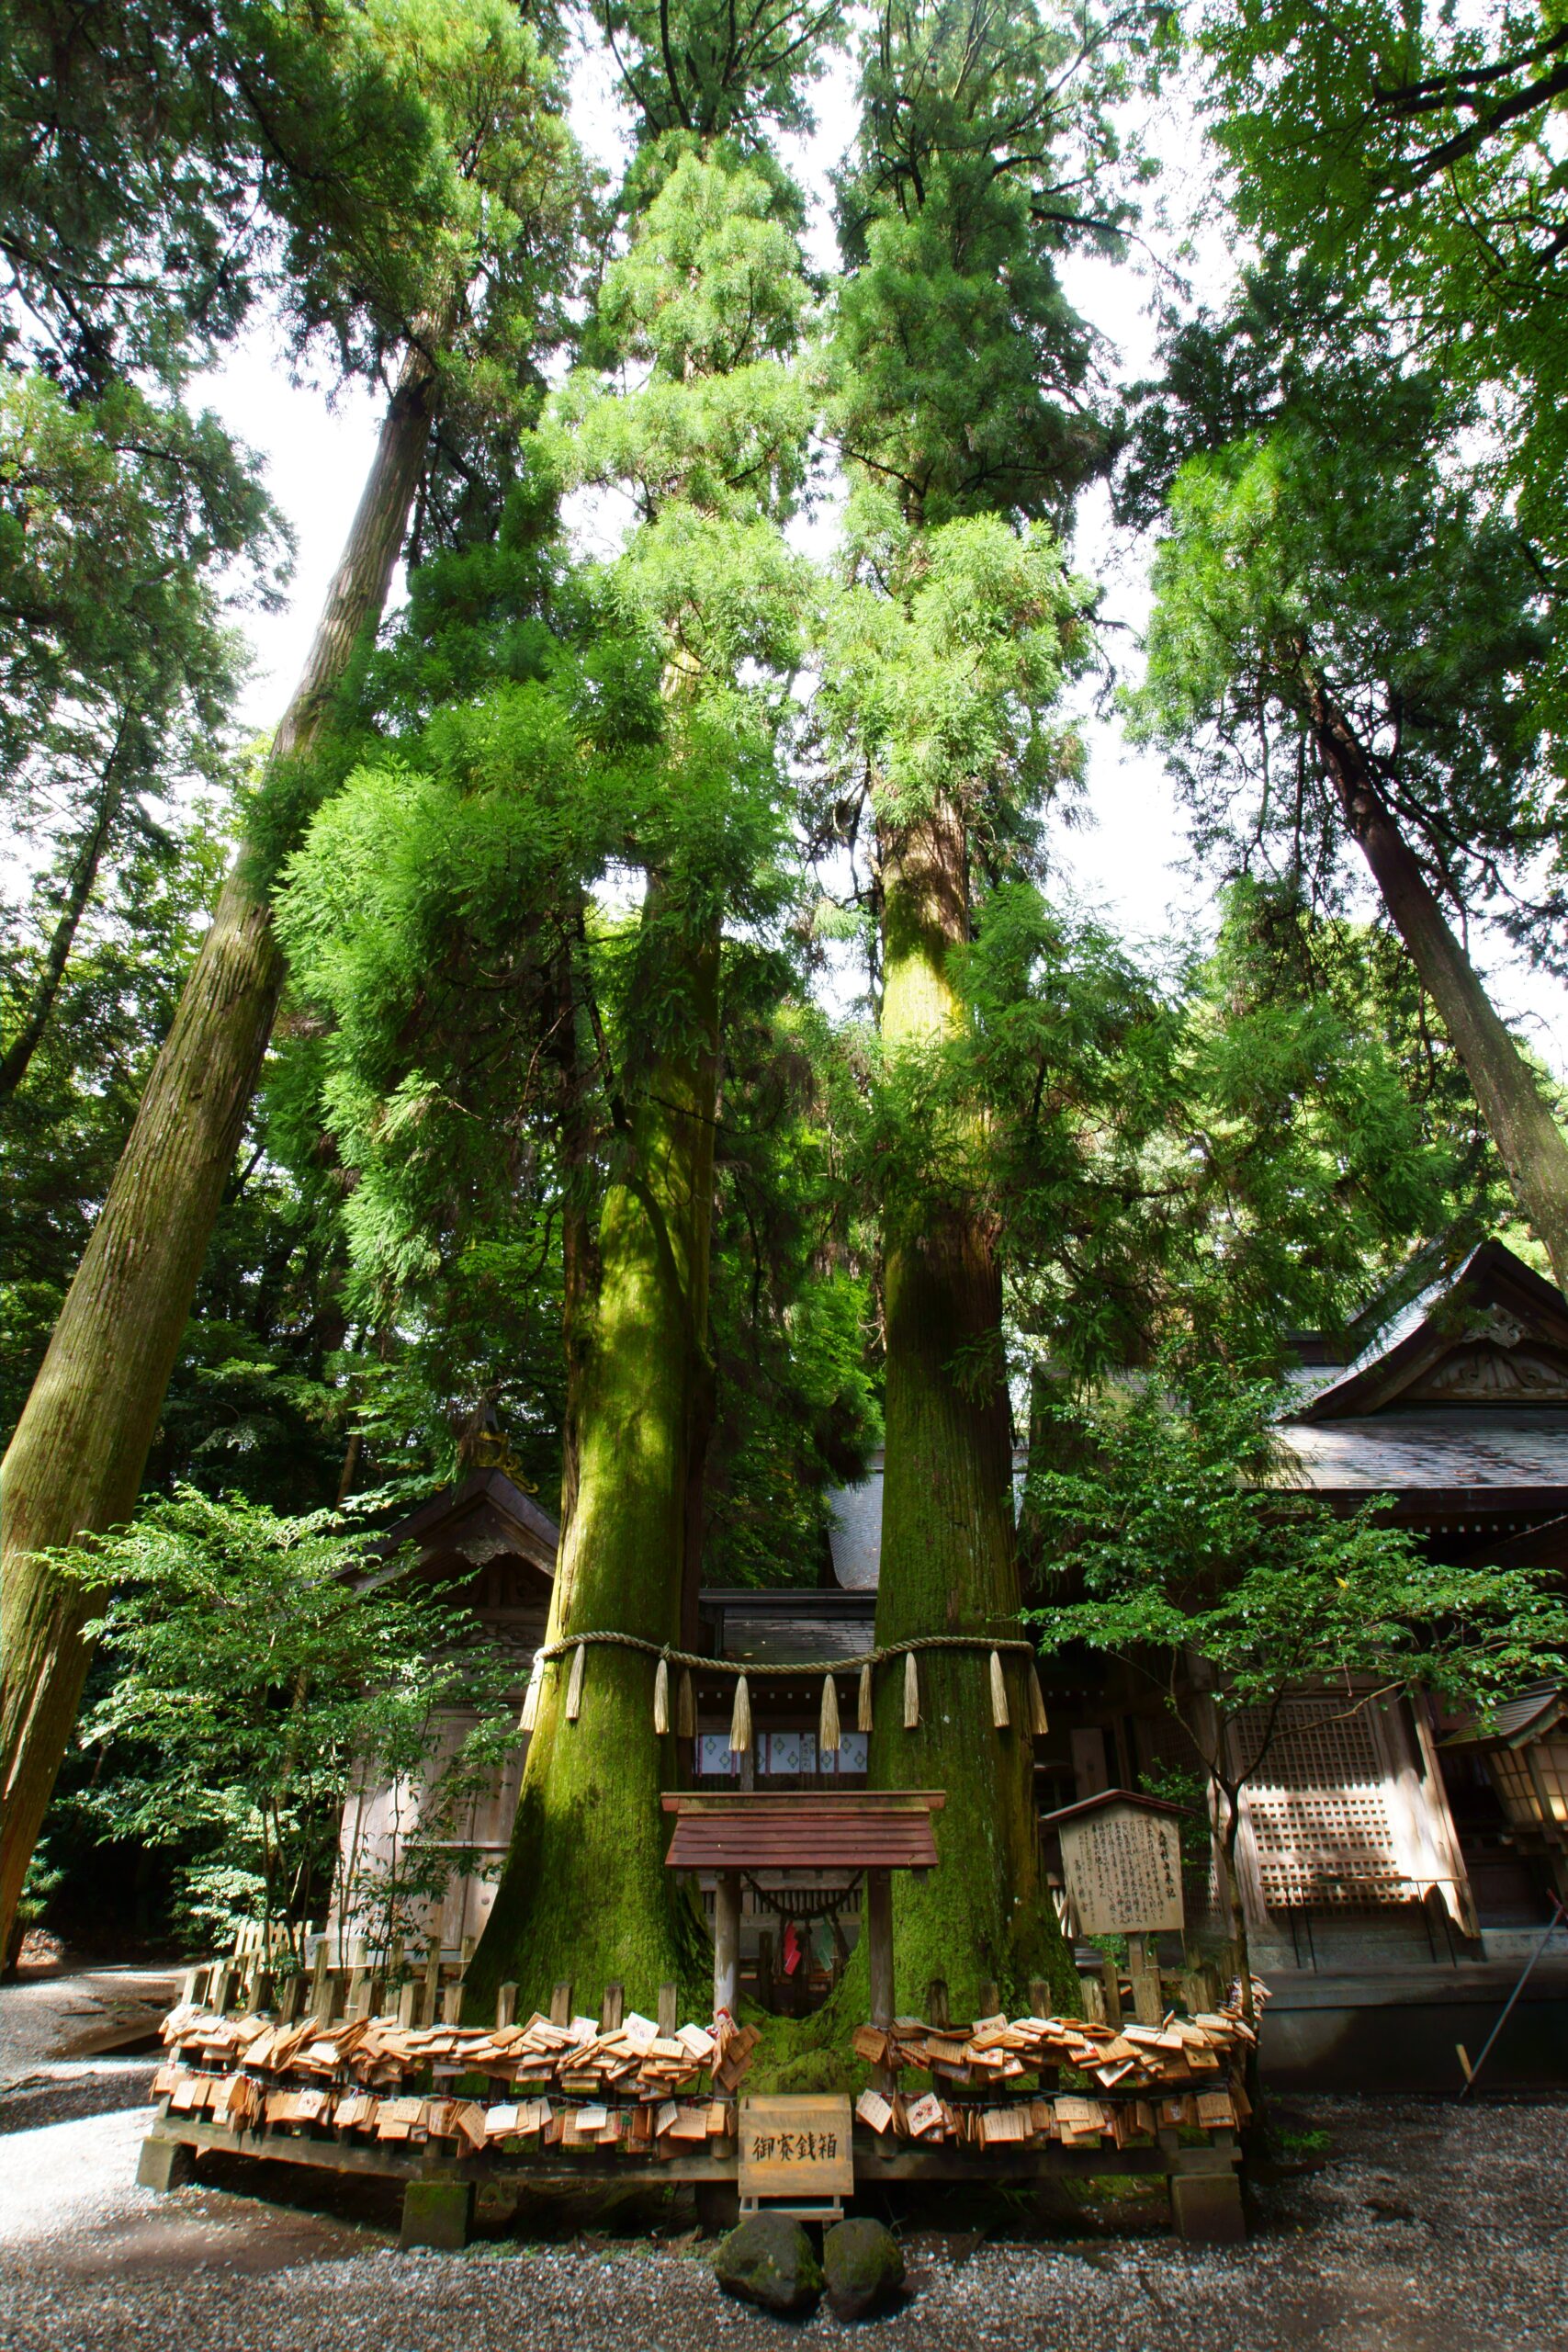 Meoto Cedar Trees (“The Married Cedars”), Takachiho Shrine